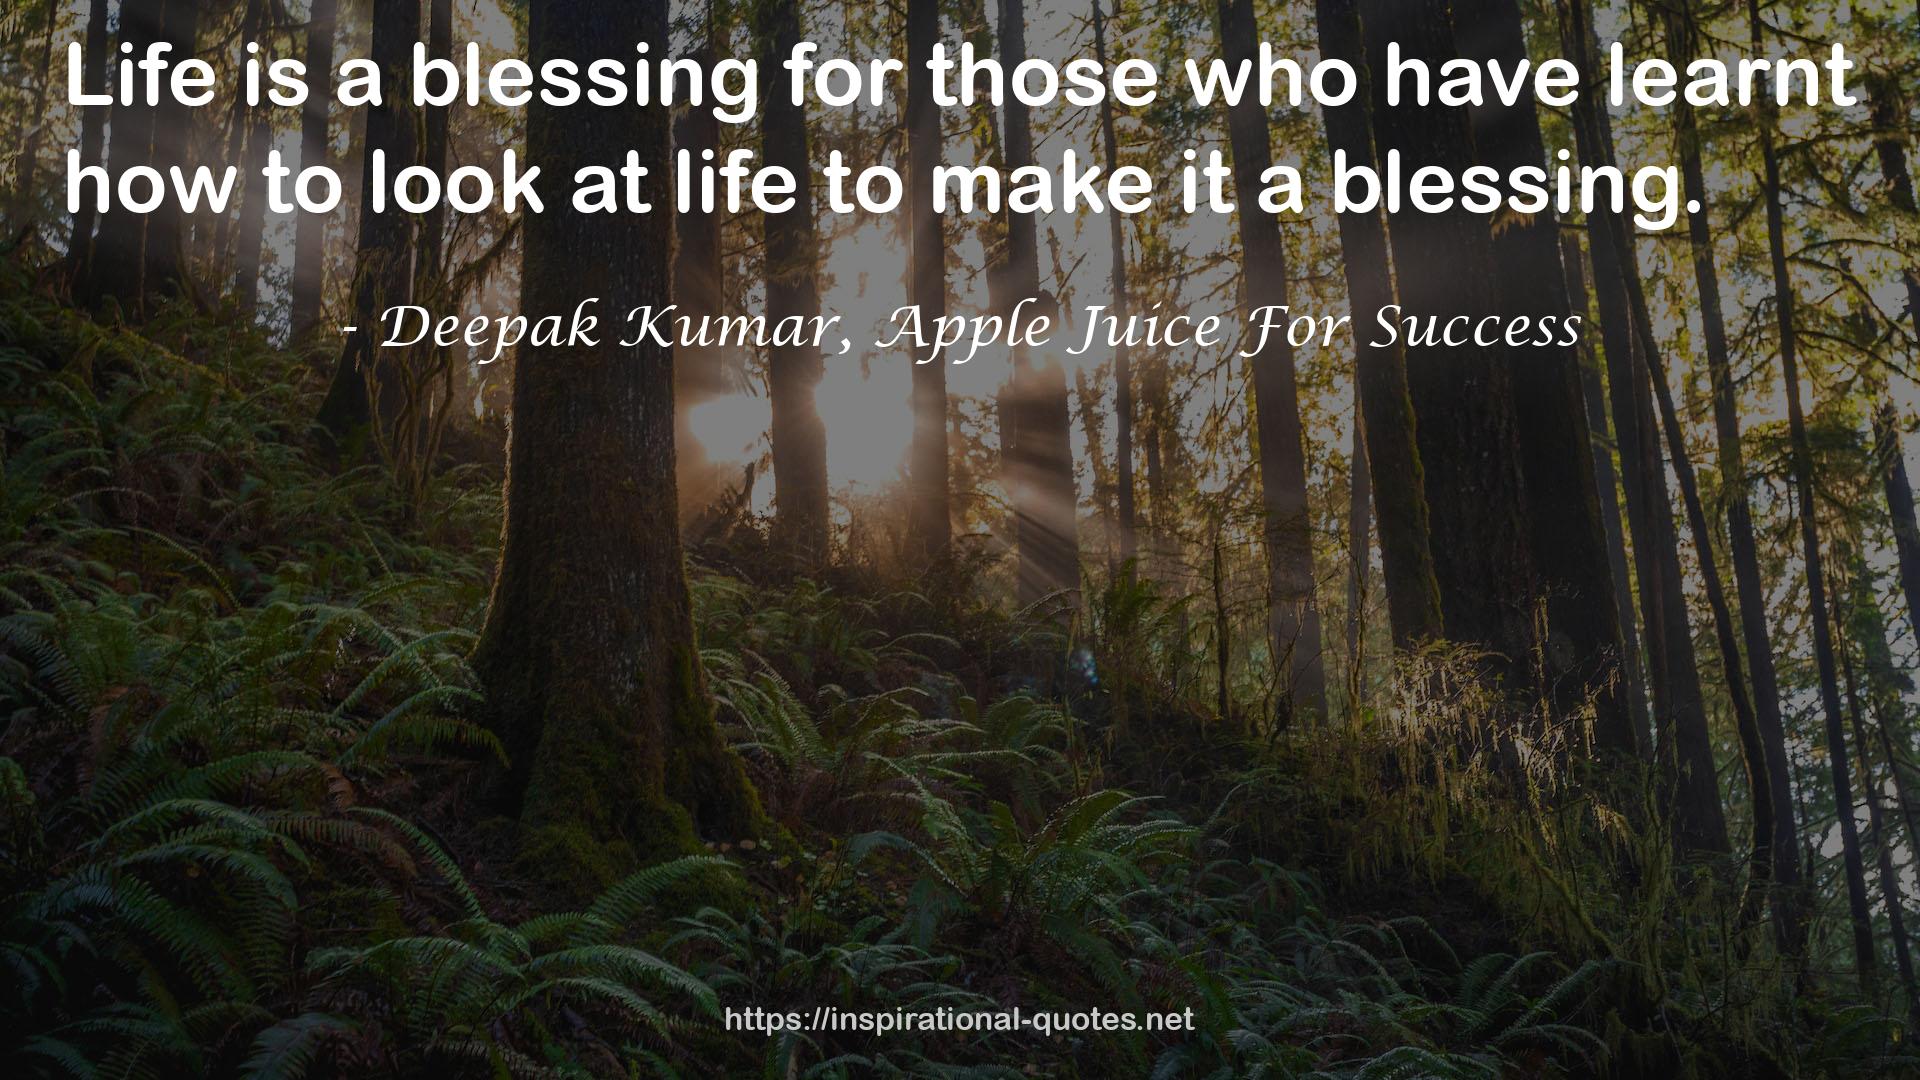 Deepak Kumar, Apple Juice For Success QUOTES